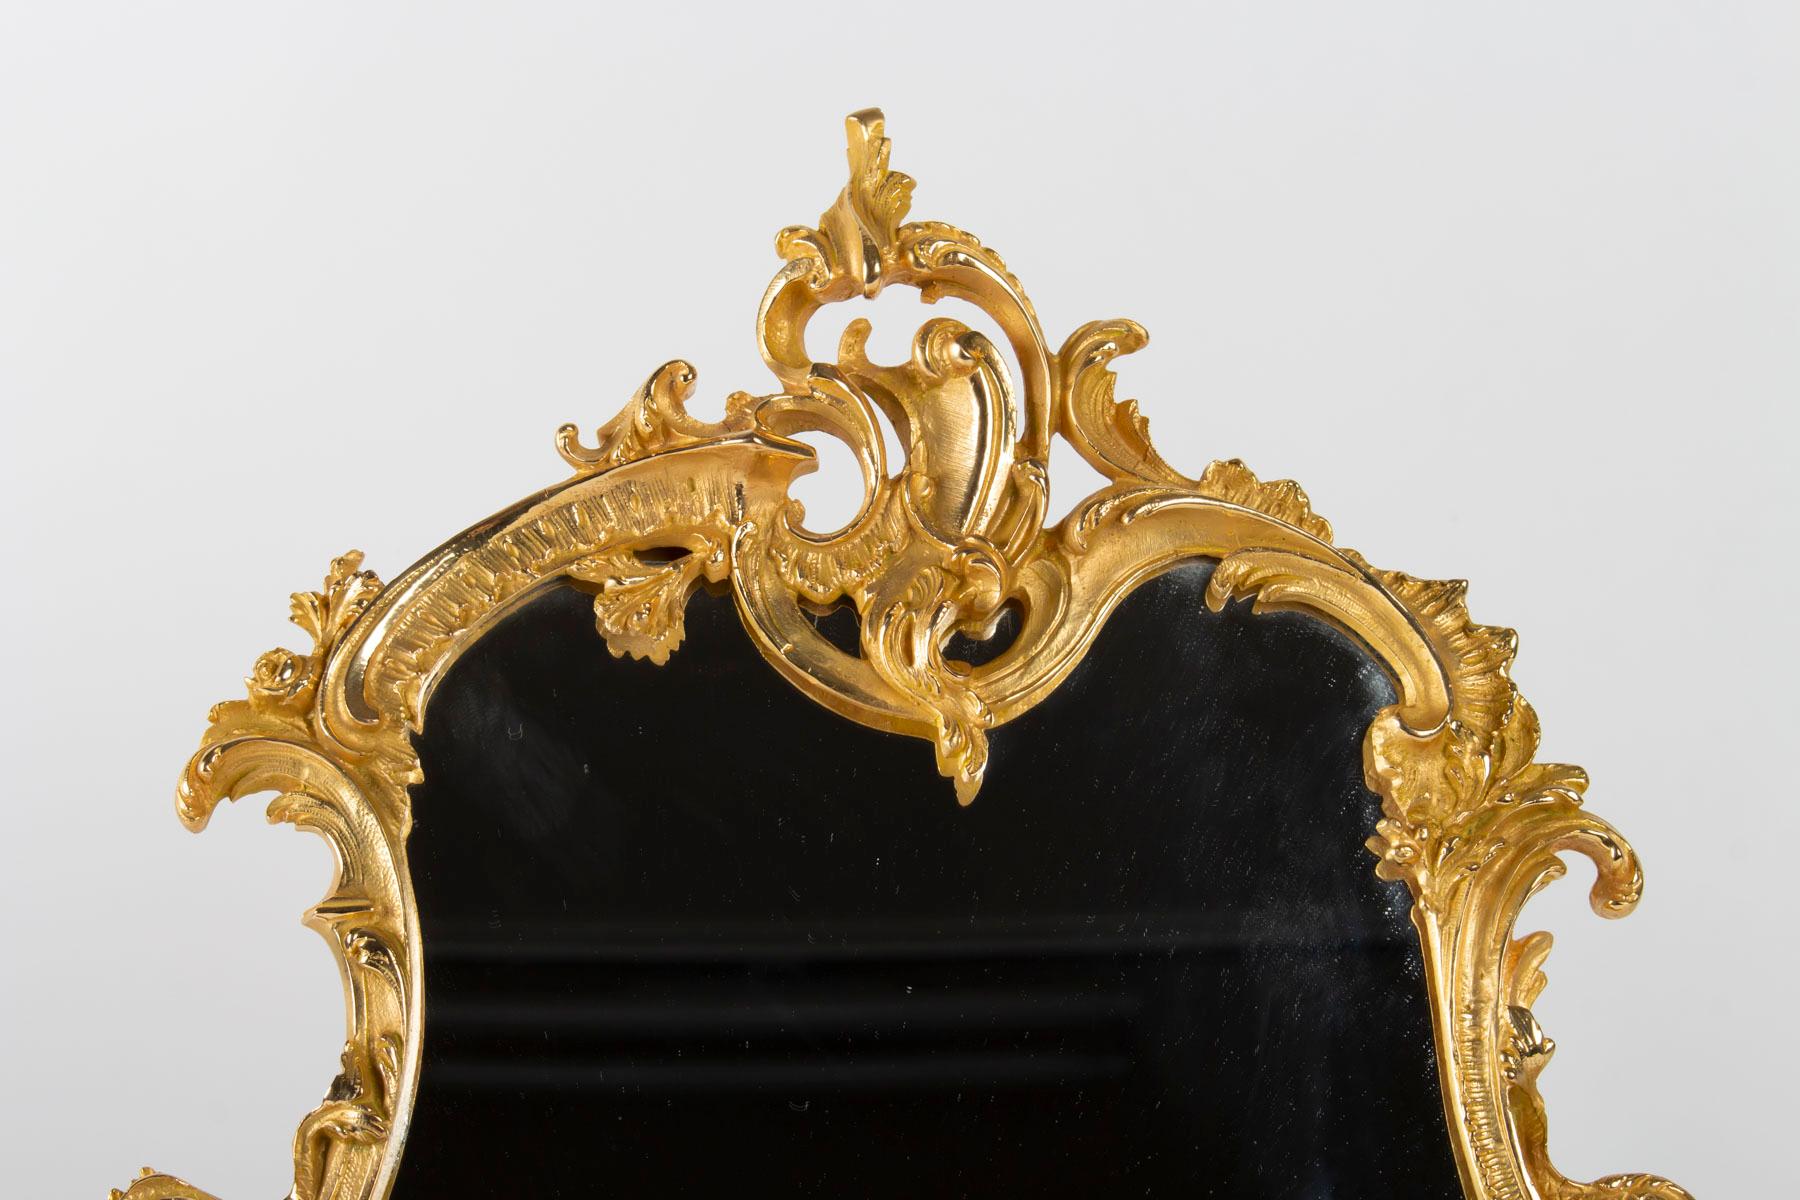 Important mirror table gilt bronze, Napoleon III period, 1870-1880, 19th century, large decoration
Measures: H 49cm, W 40cm, D 10cm.